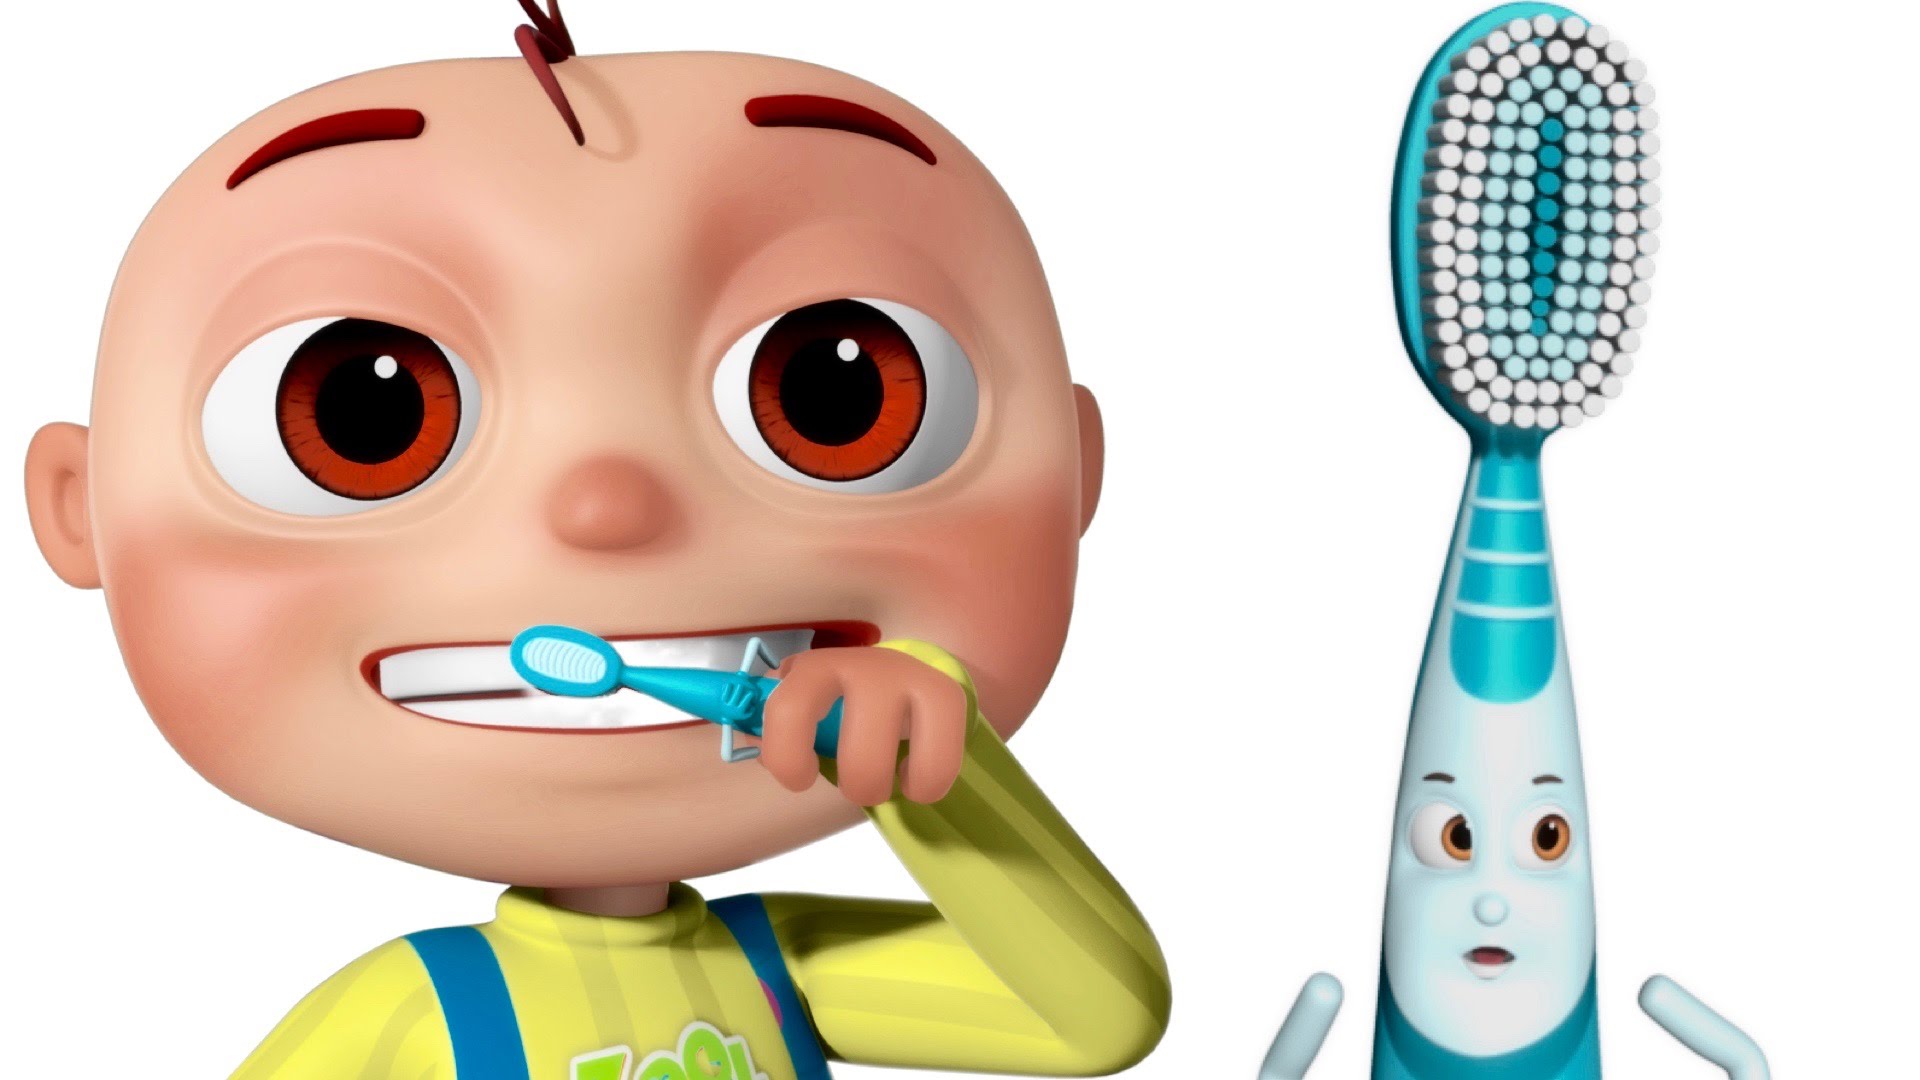 Brushing Teeth Habits in Children